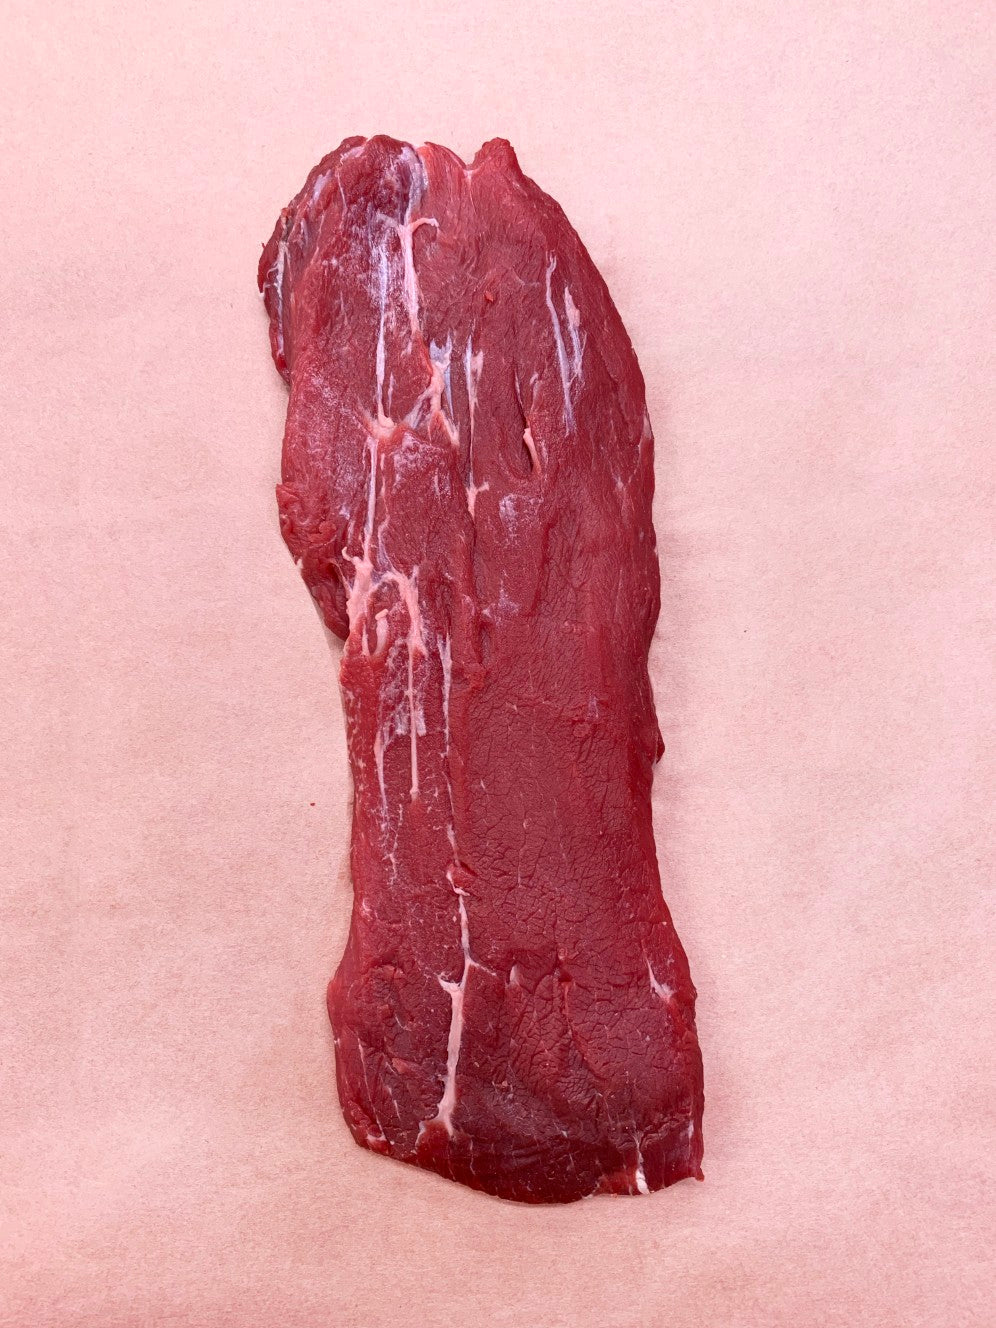 steak frais (non vieilli), par 200g